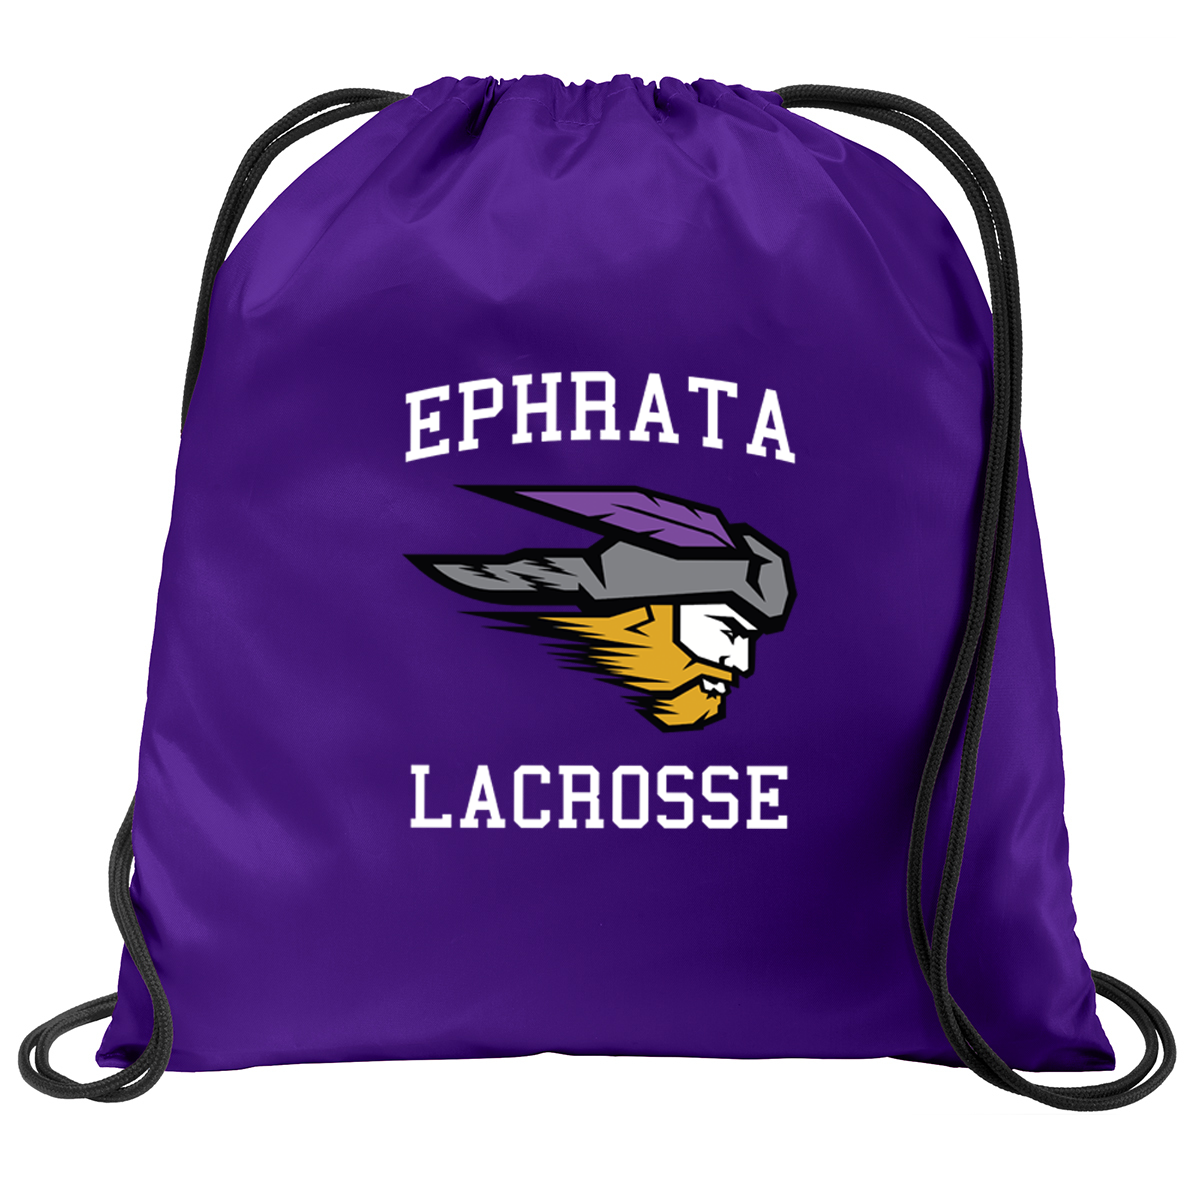 Ephrata Lacrosse Purple Cinch Pack